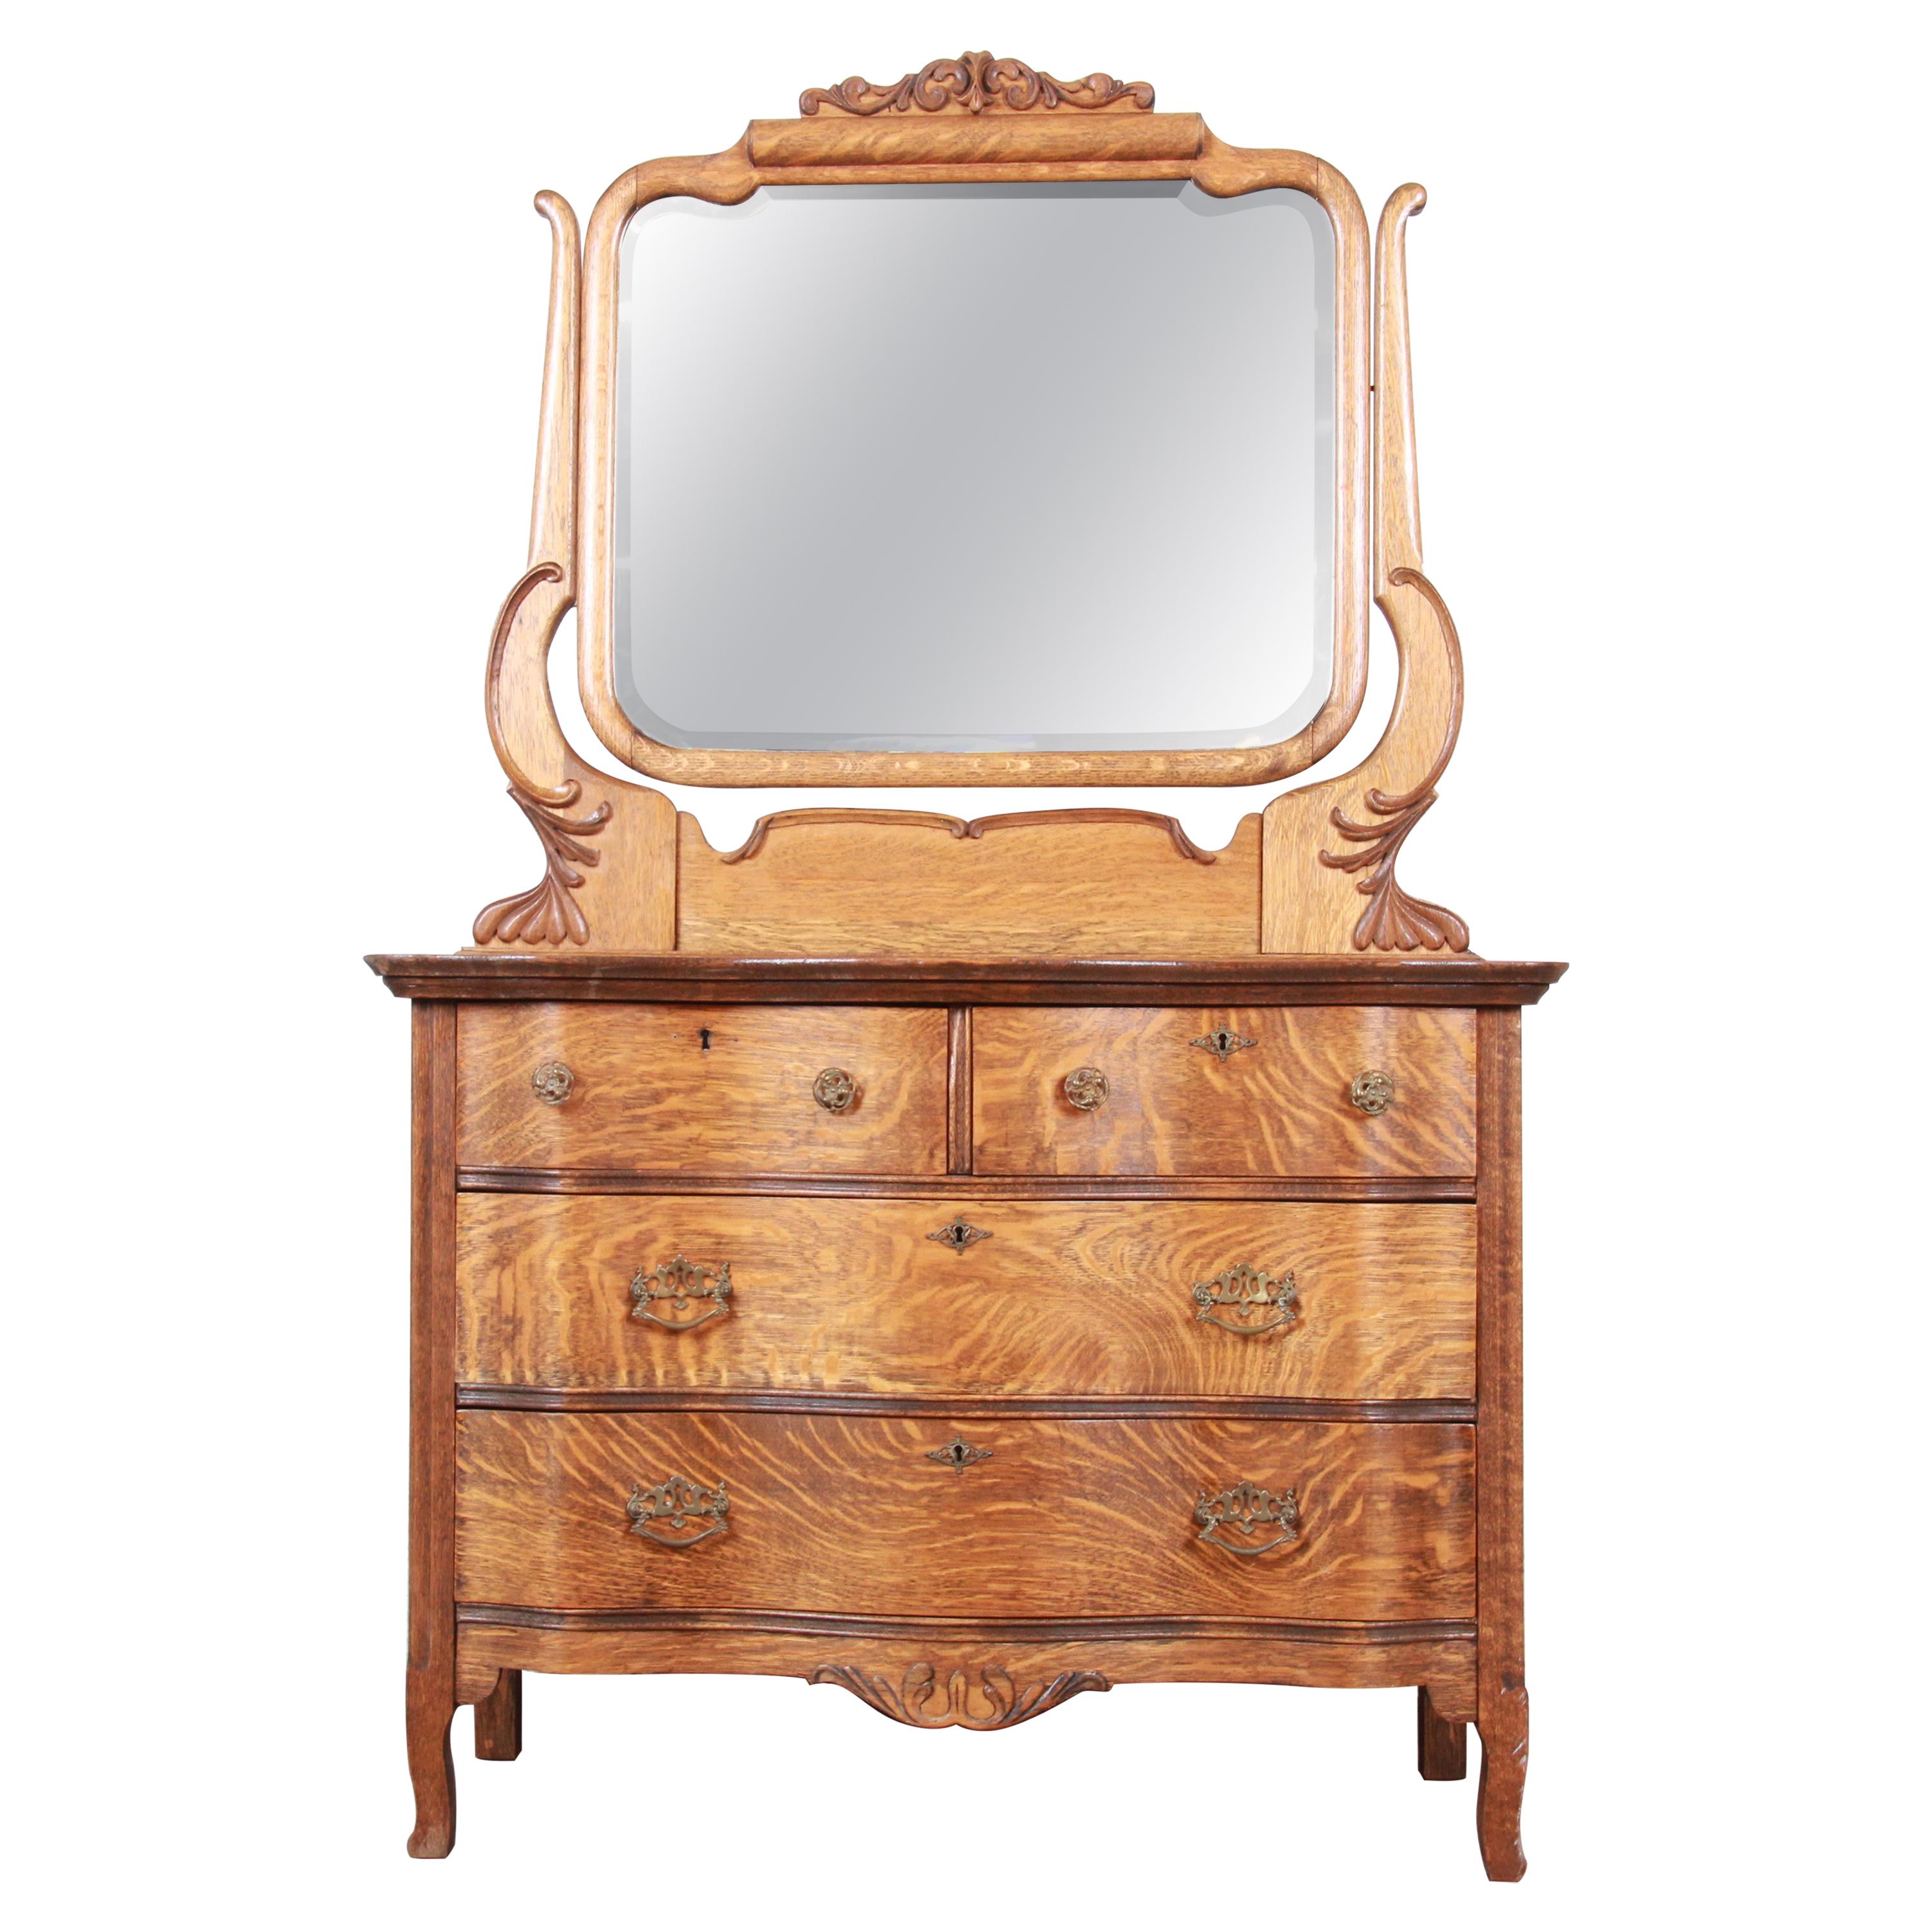 Antique Oak Dresser With Mirror 3 For, Antique Oak Dresser With Mirror Value